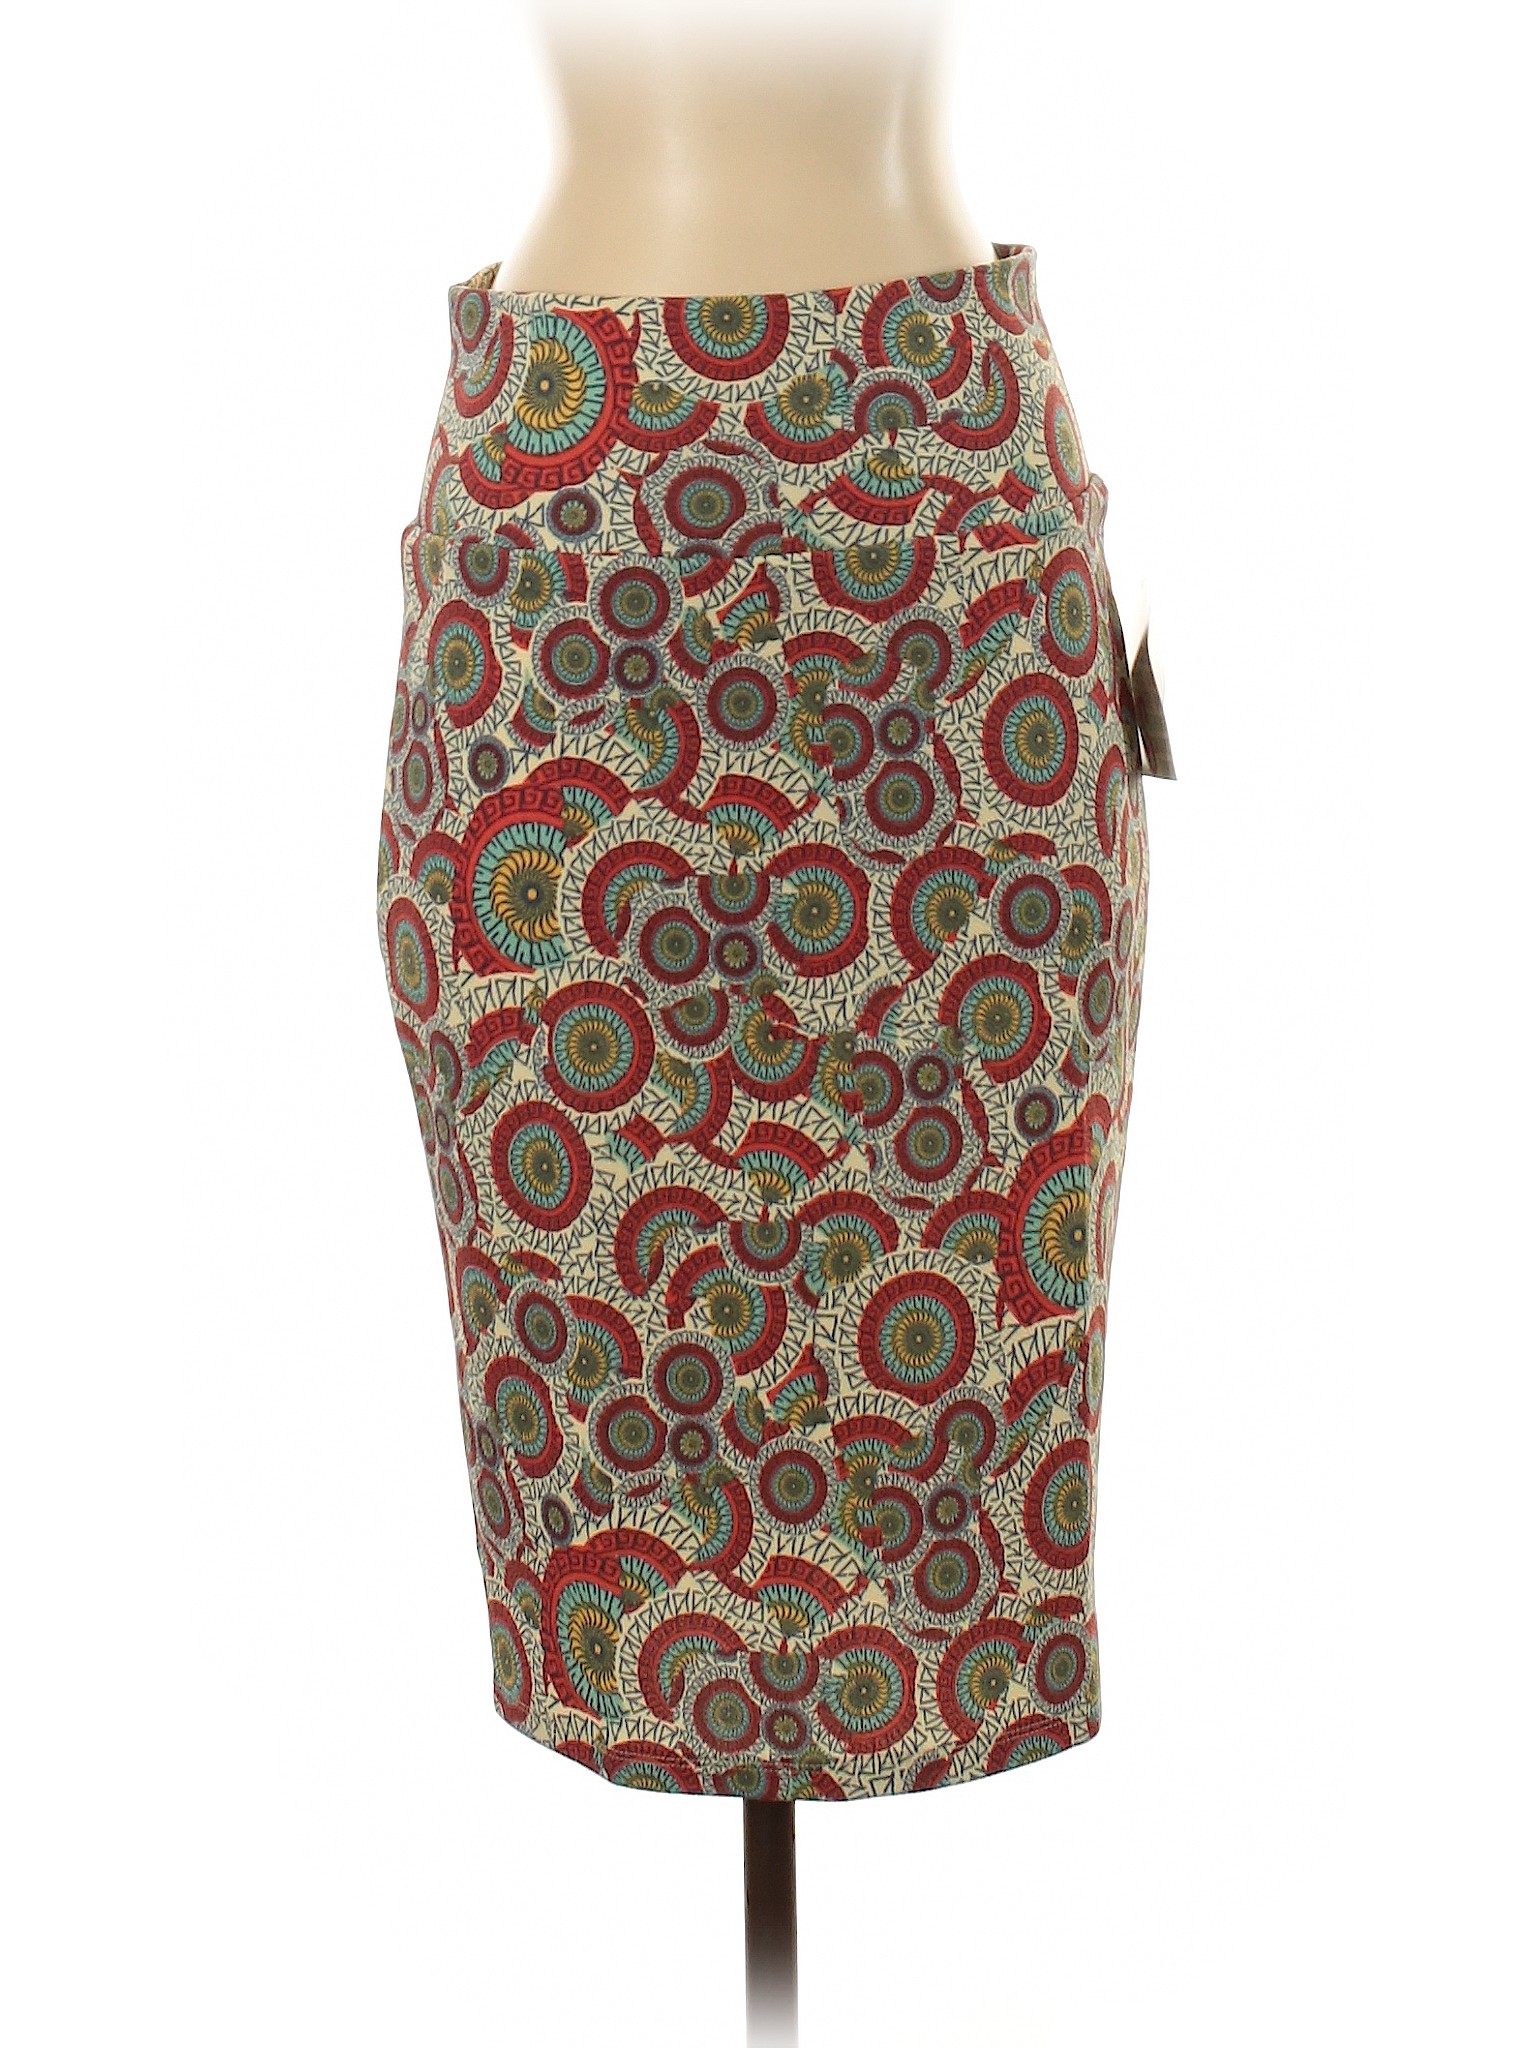 NWT Lularoe Women Green Casual Skirt S | eBay